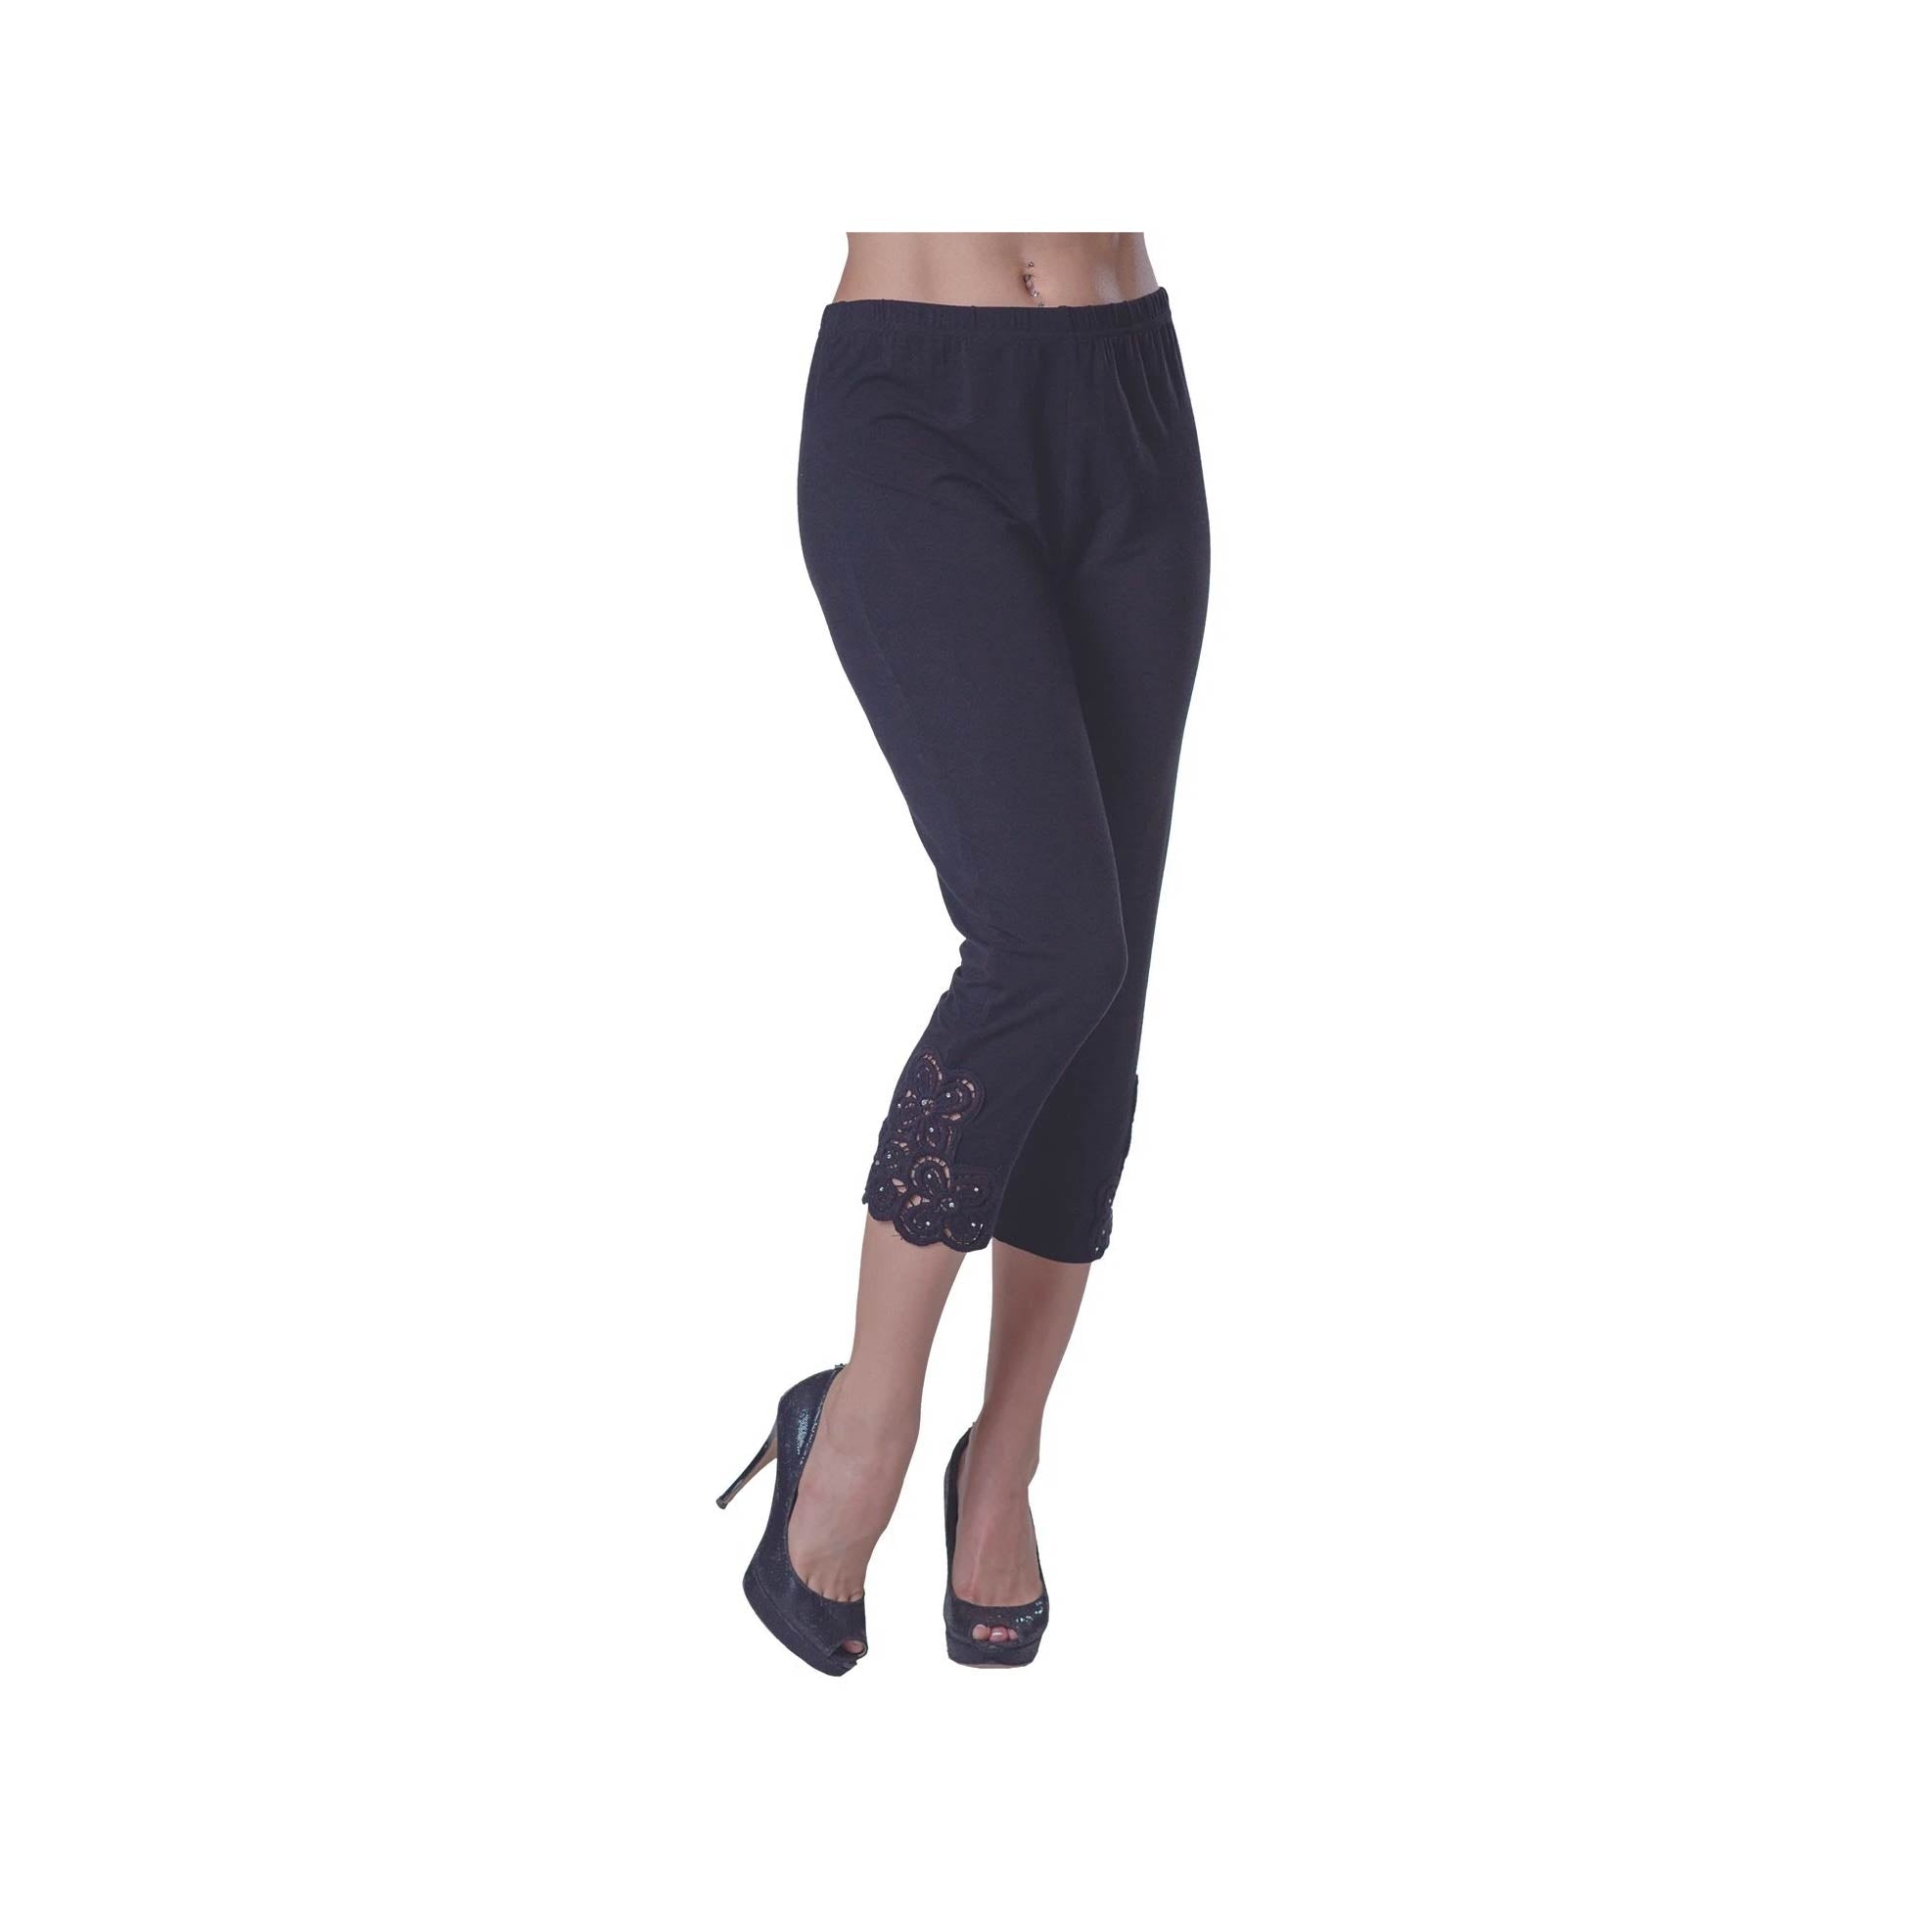 ZLBDYG Womens Pants Leggings Women's Pocket Capri 3/4 High Waist